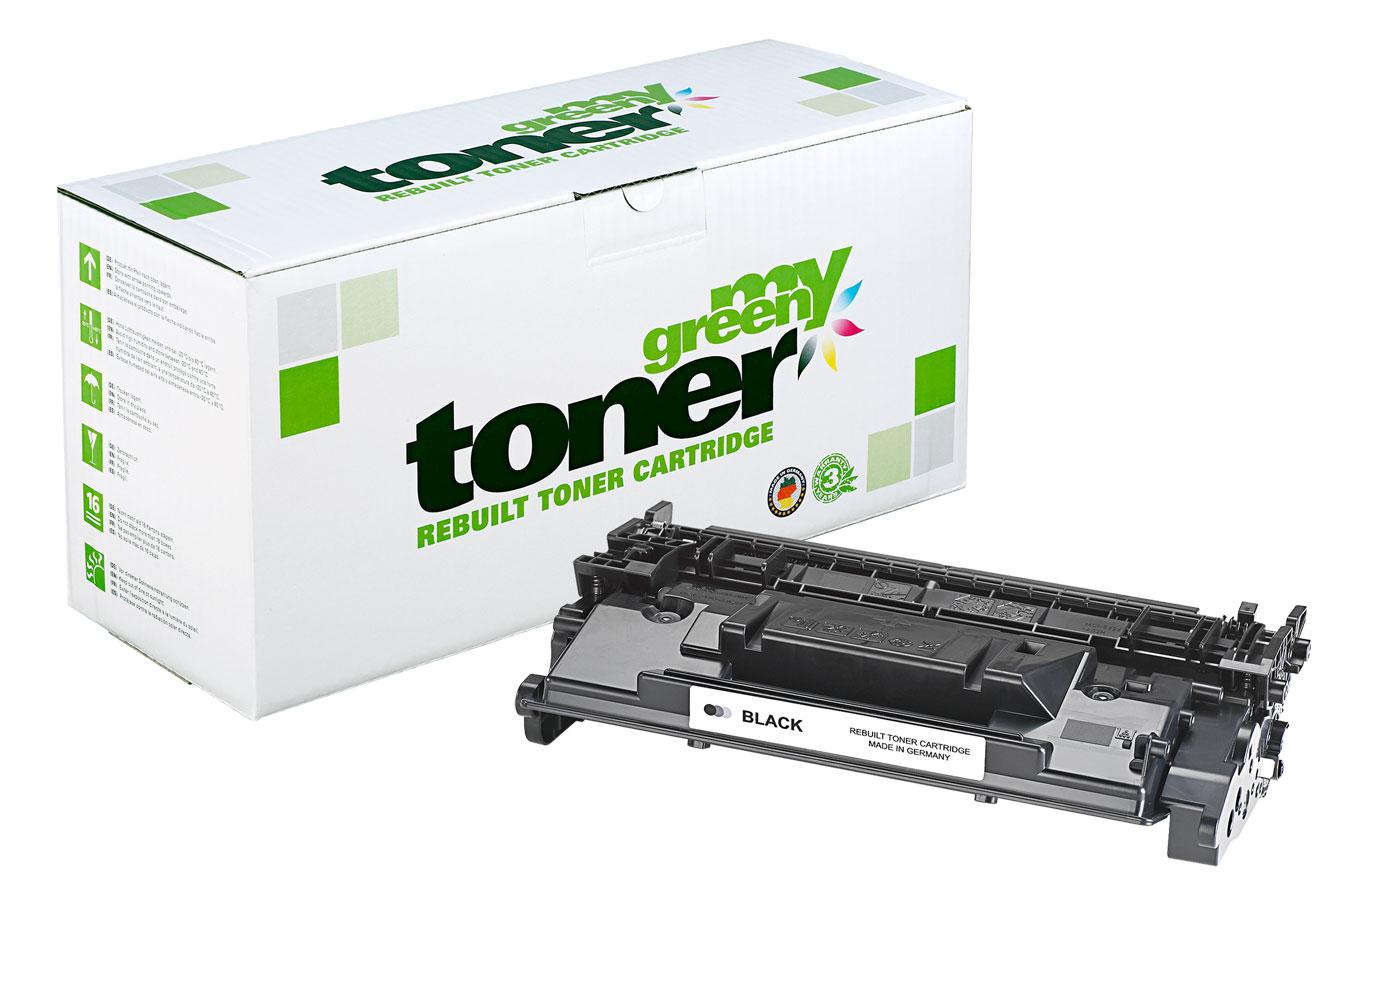 Rebuilt Toner Cartridge for HP LaserJet Pro 4001, MFP 4101 a. o.